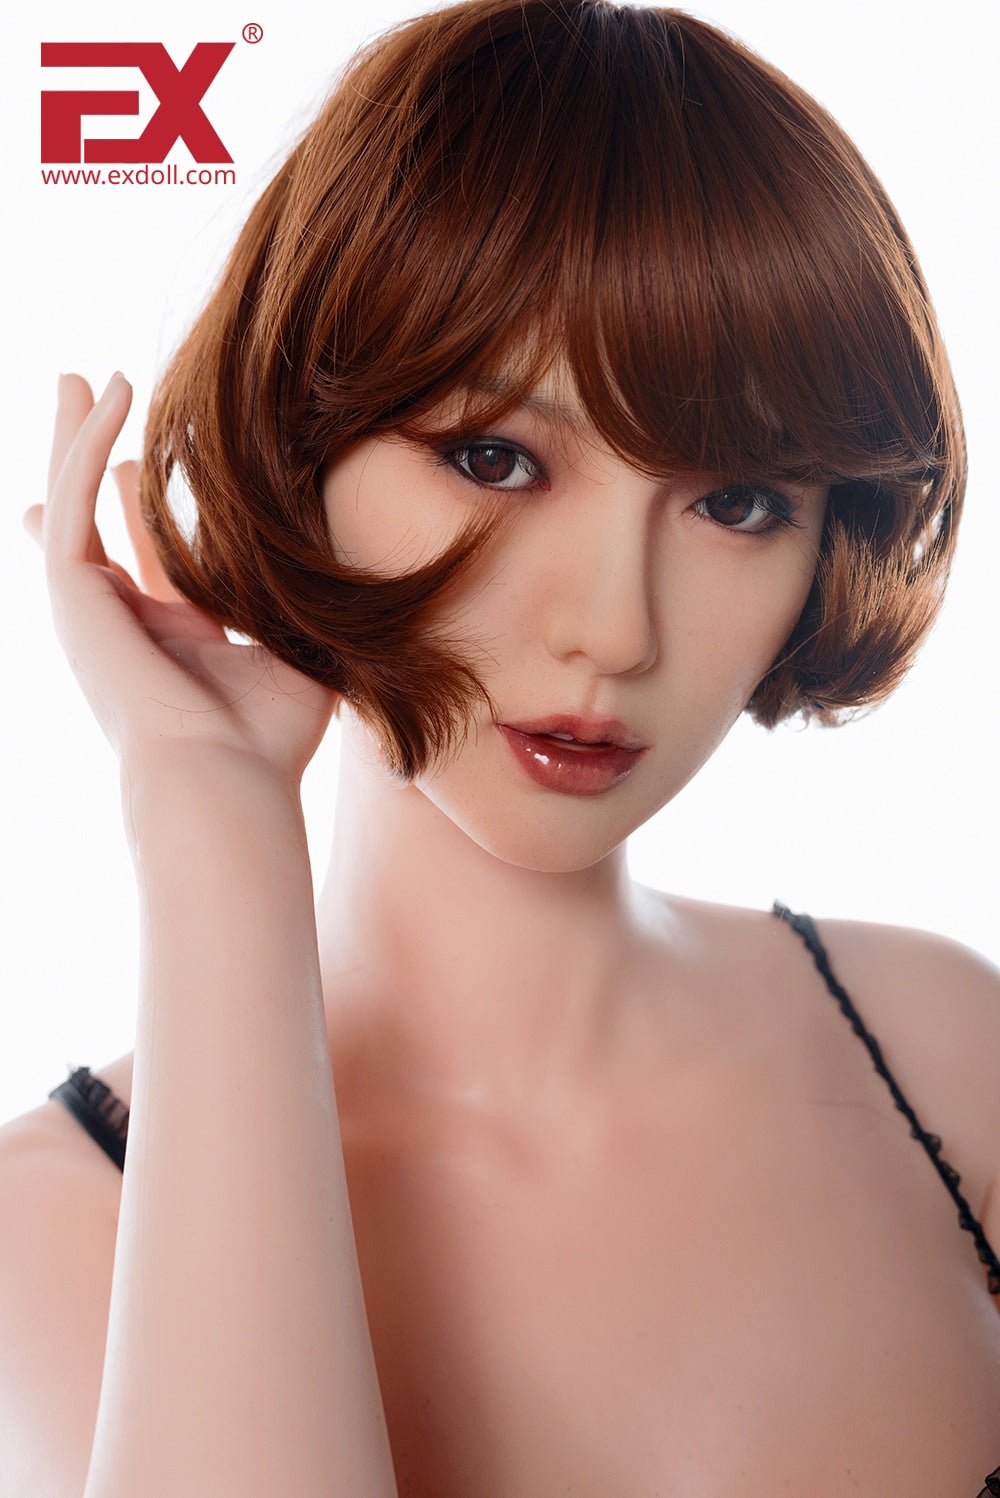 EX Doll Ukiyoe Series 170 cm Silicone - Yutsuki | Buy Sex Dolls at DOLLS ACTUALLY